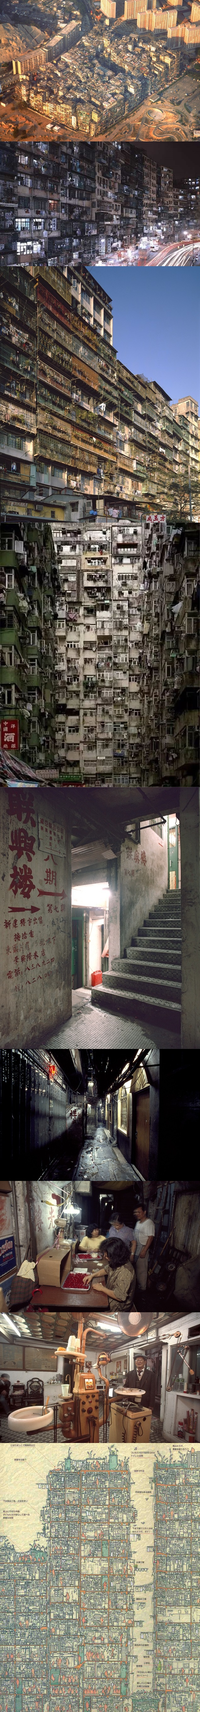 La citadelle de Kowloon : un air de cyberpunk